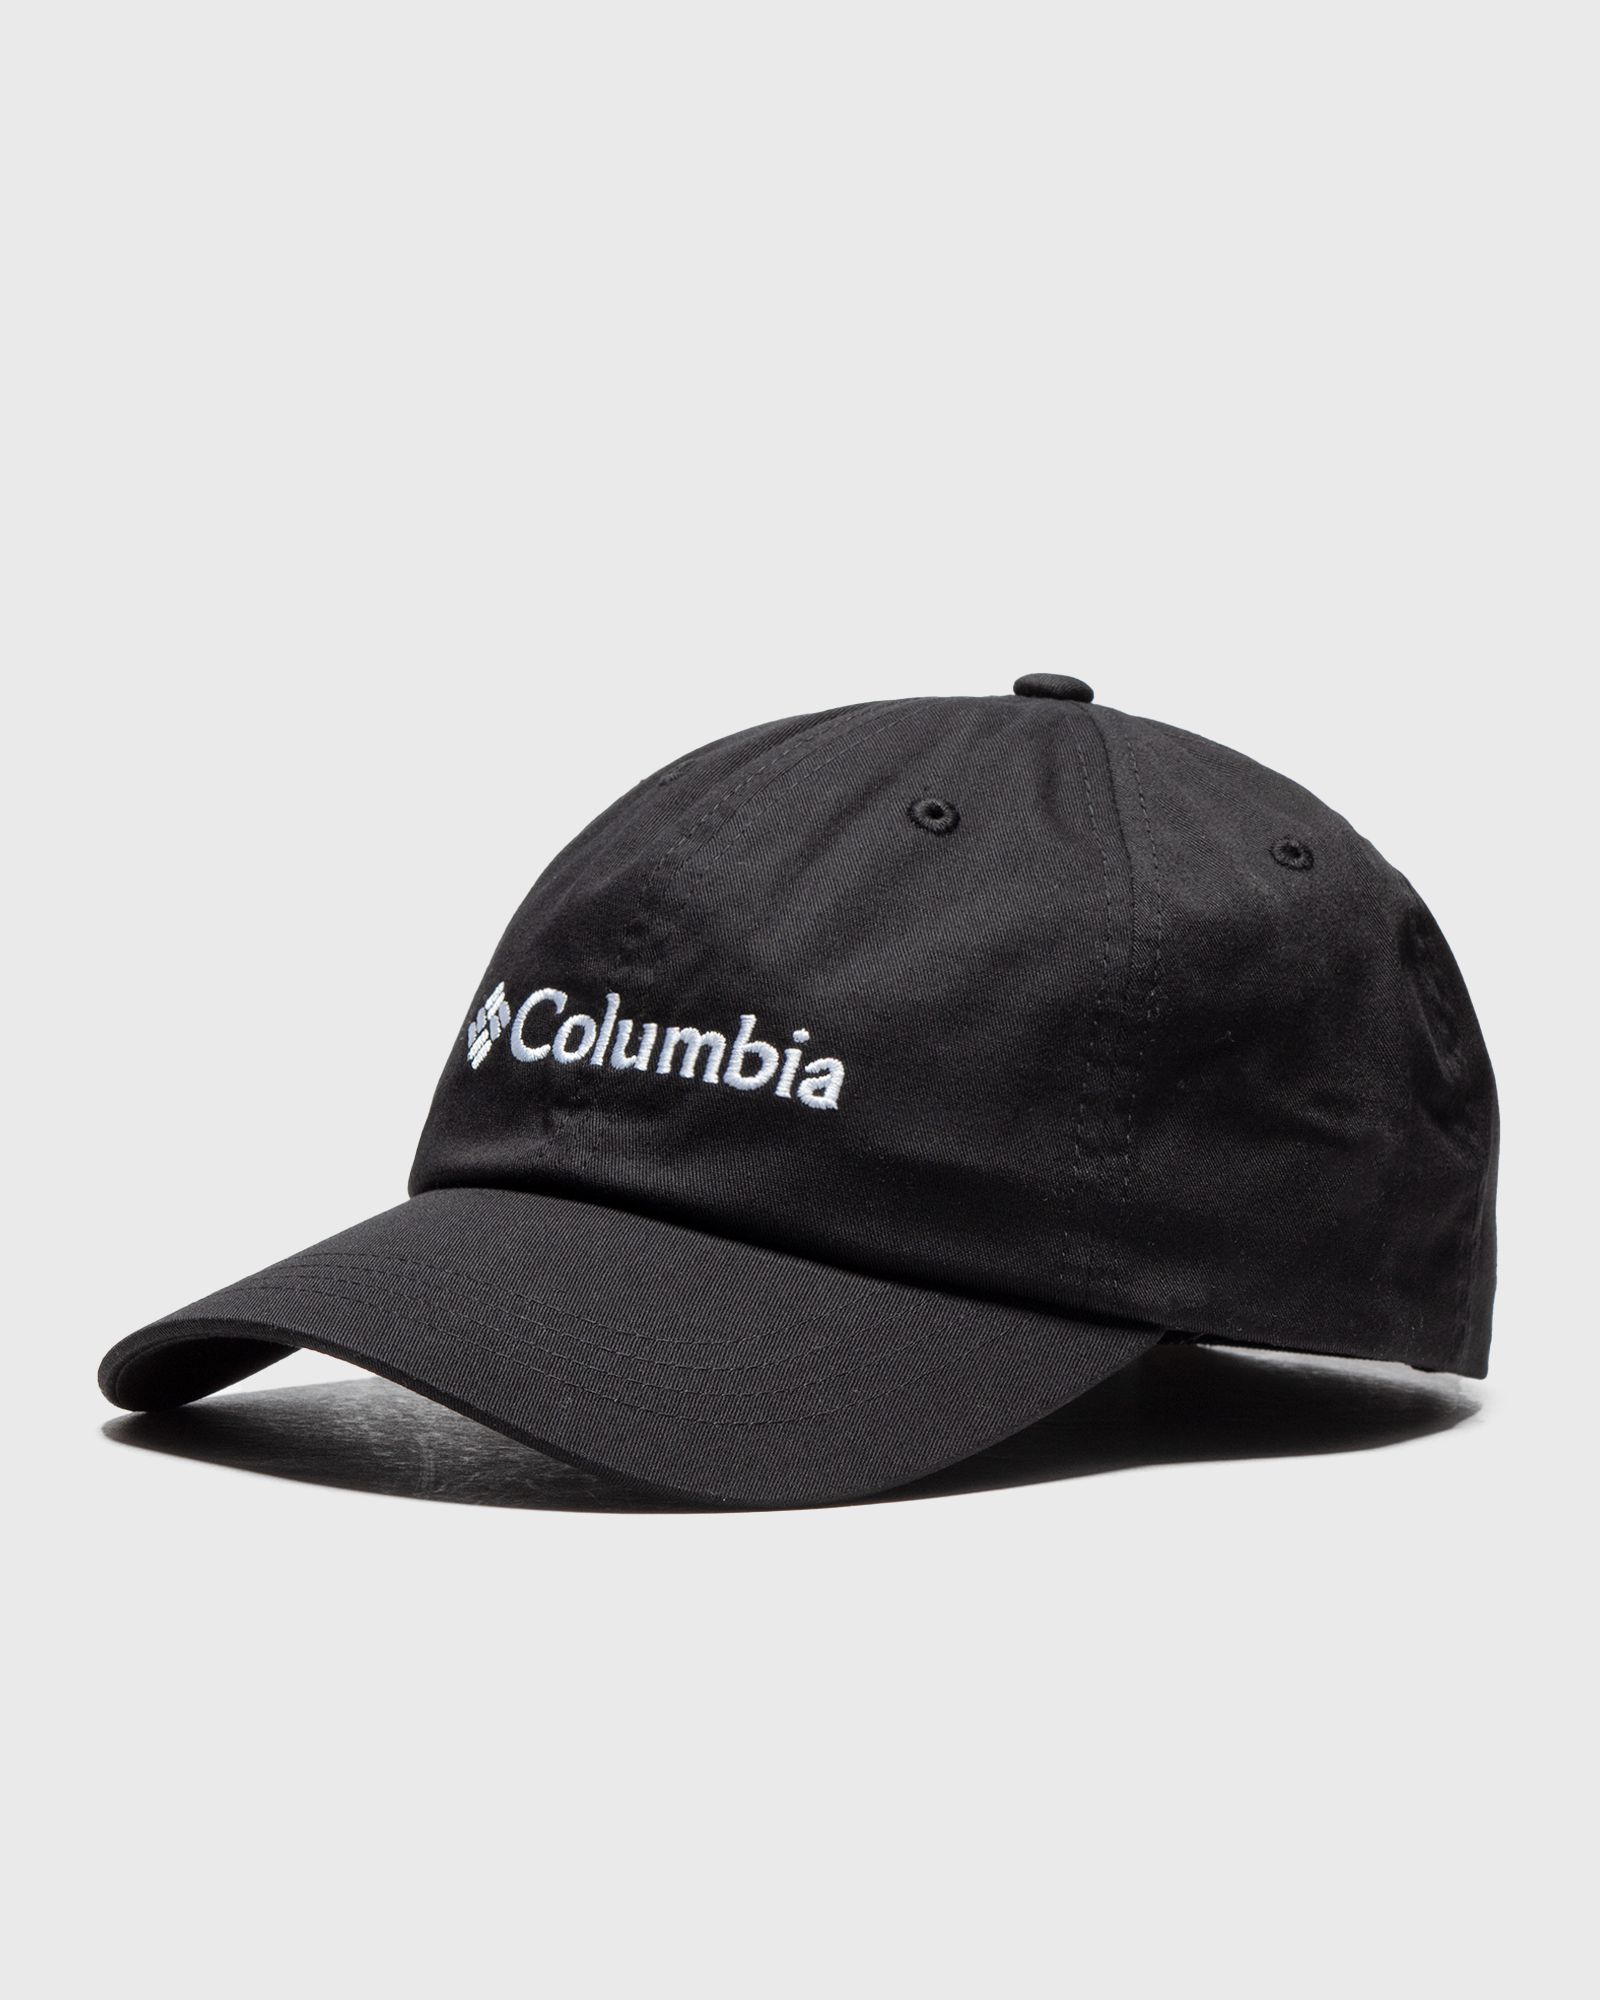 Columbia - roc ii hat men caps black in größe:one size